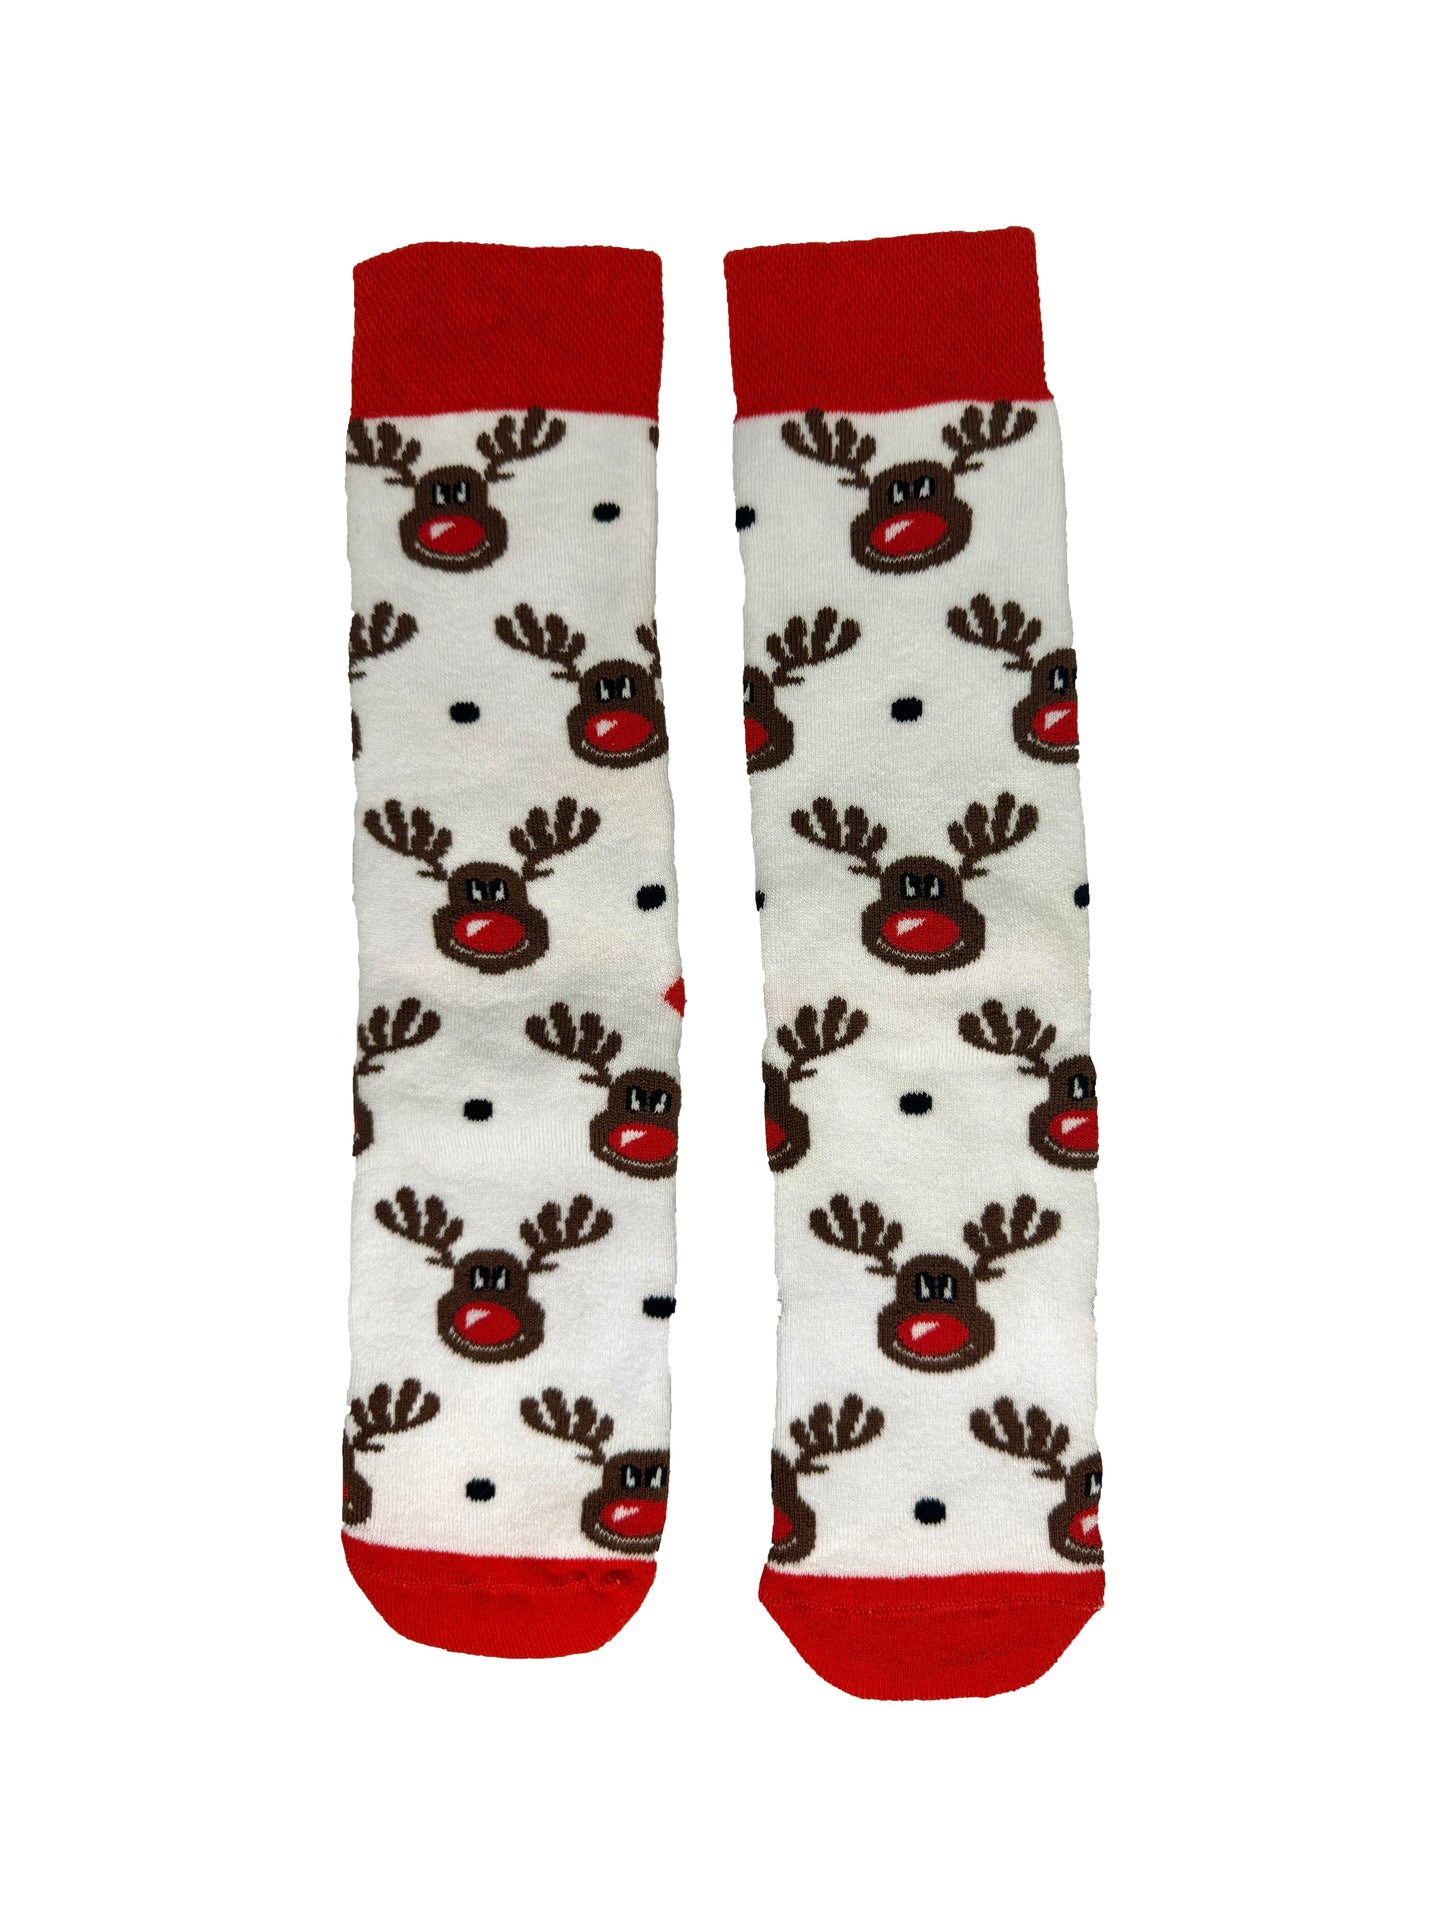 Red Nosed Christmas Socks